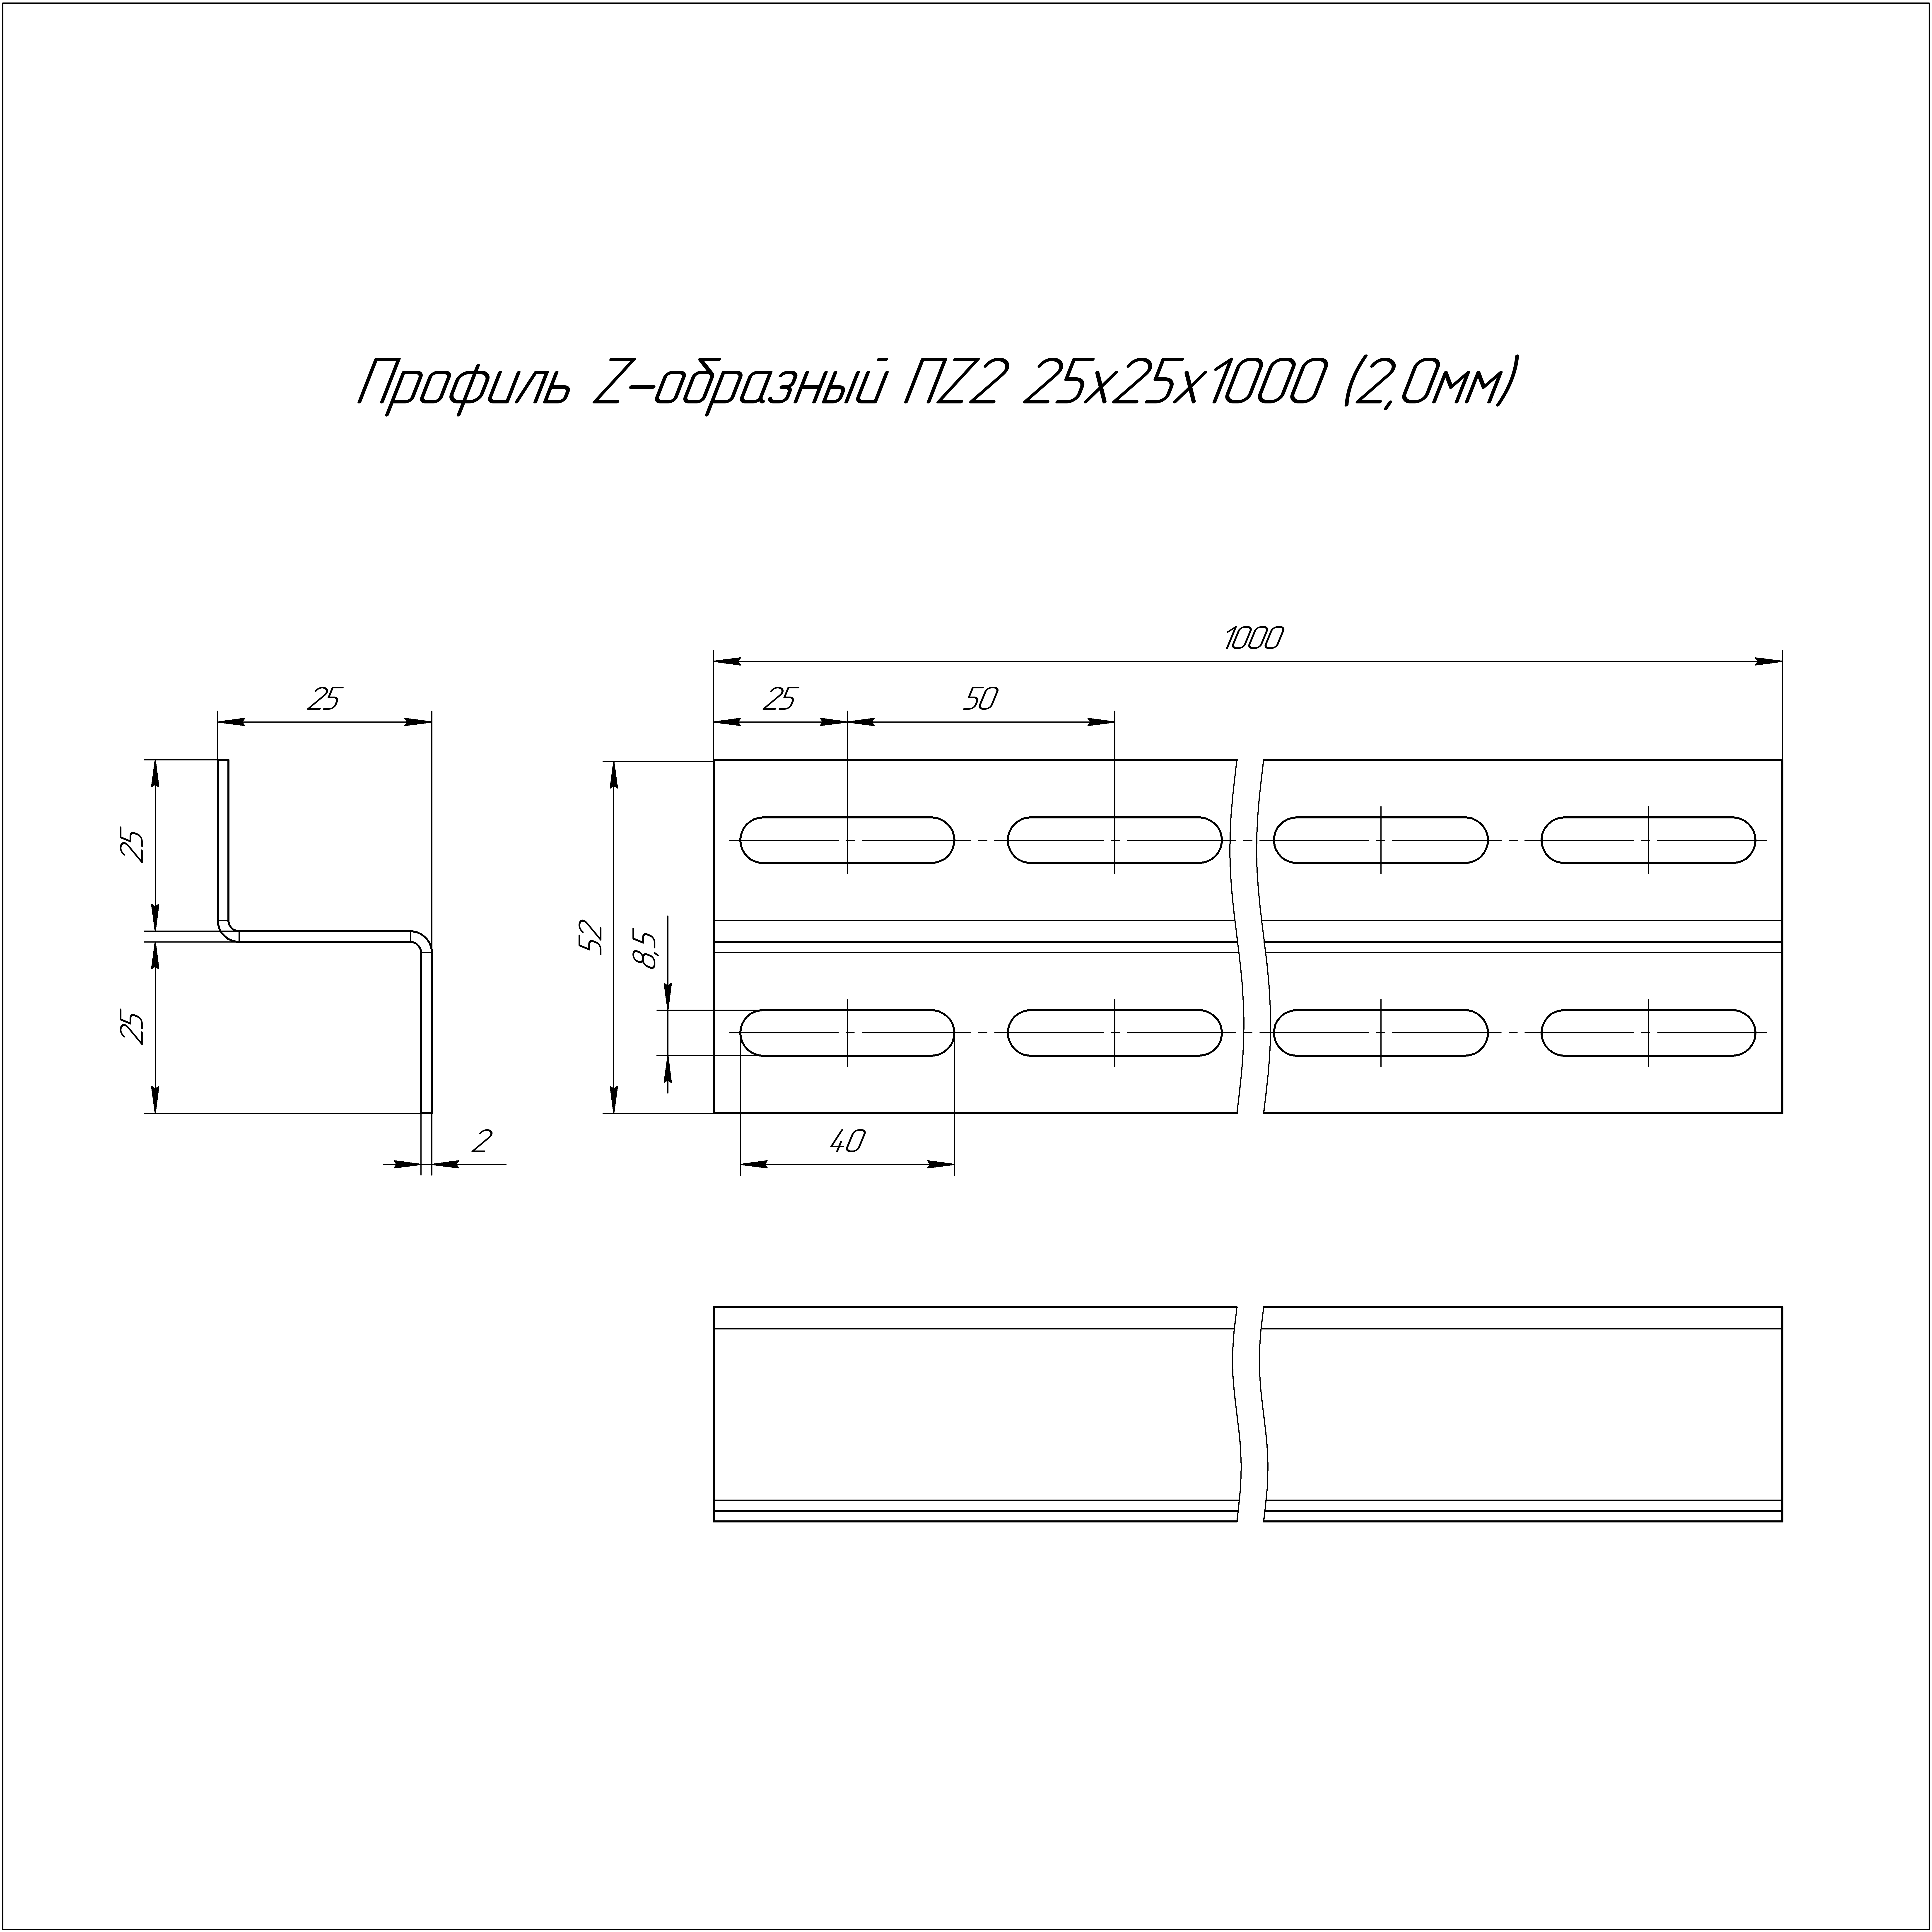 Профиль Z-образный INOX (AISI 409) ПZ2-25х25х1000 (2,0 мм) Промрукав